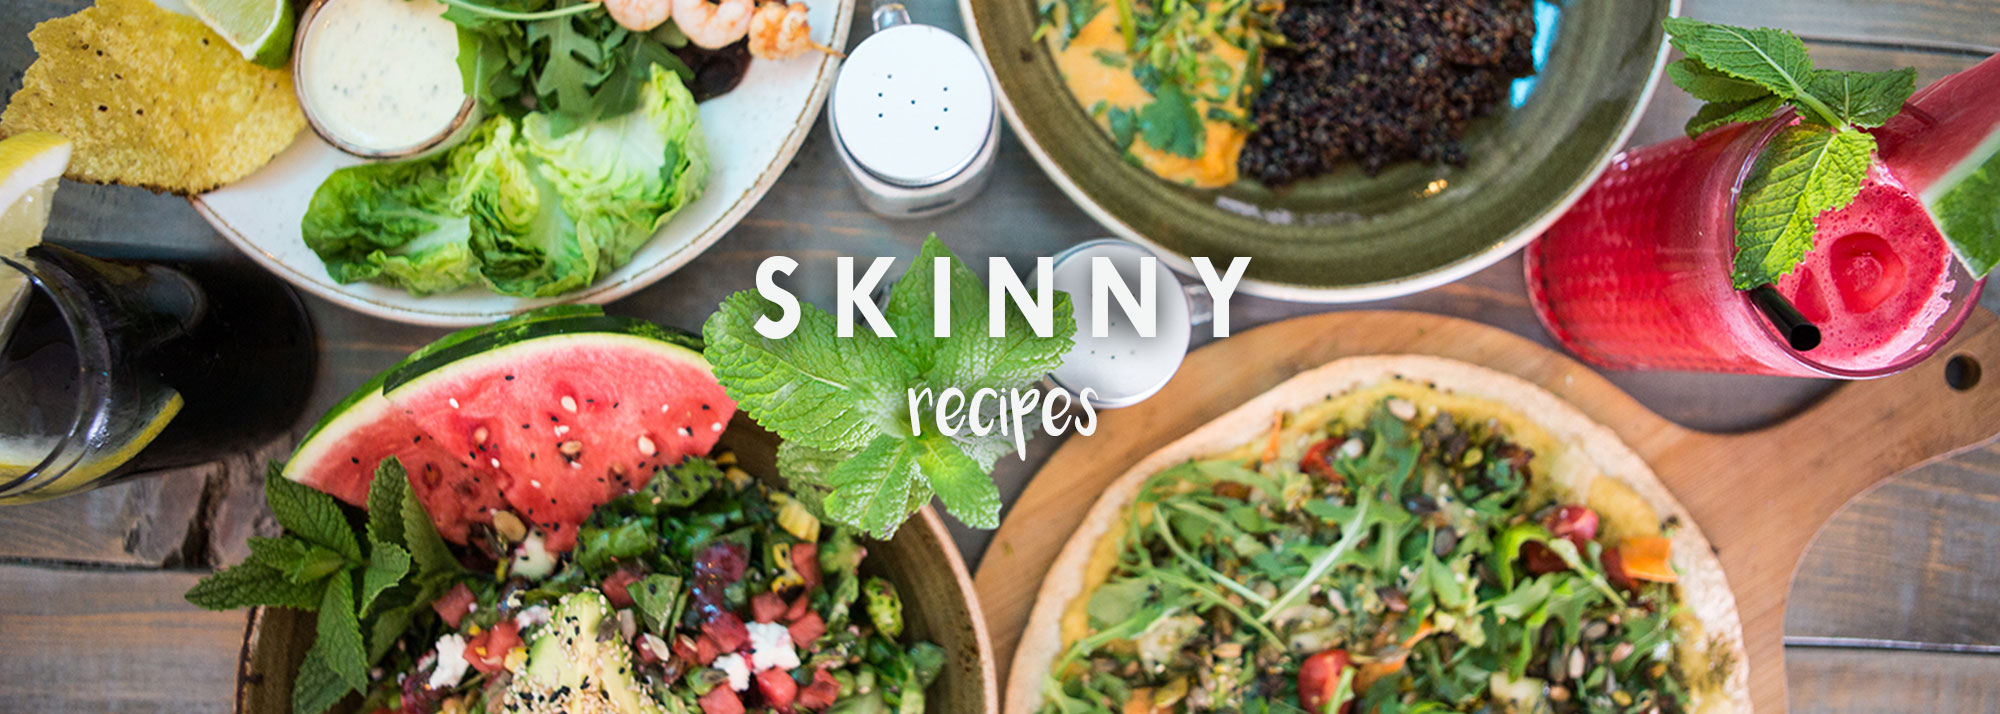 Skinny Recipes